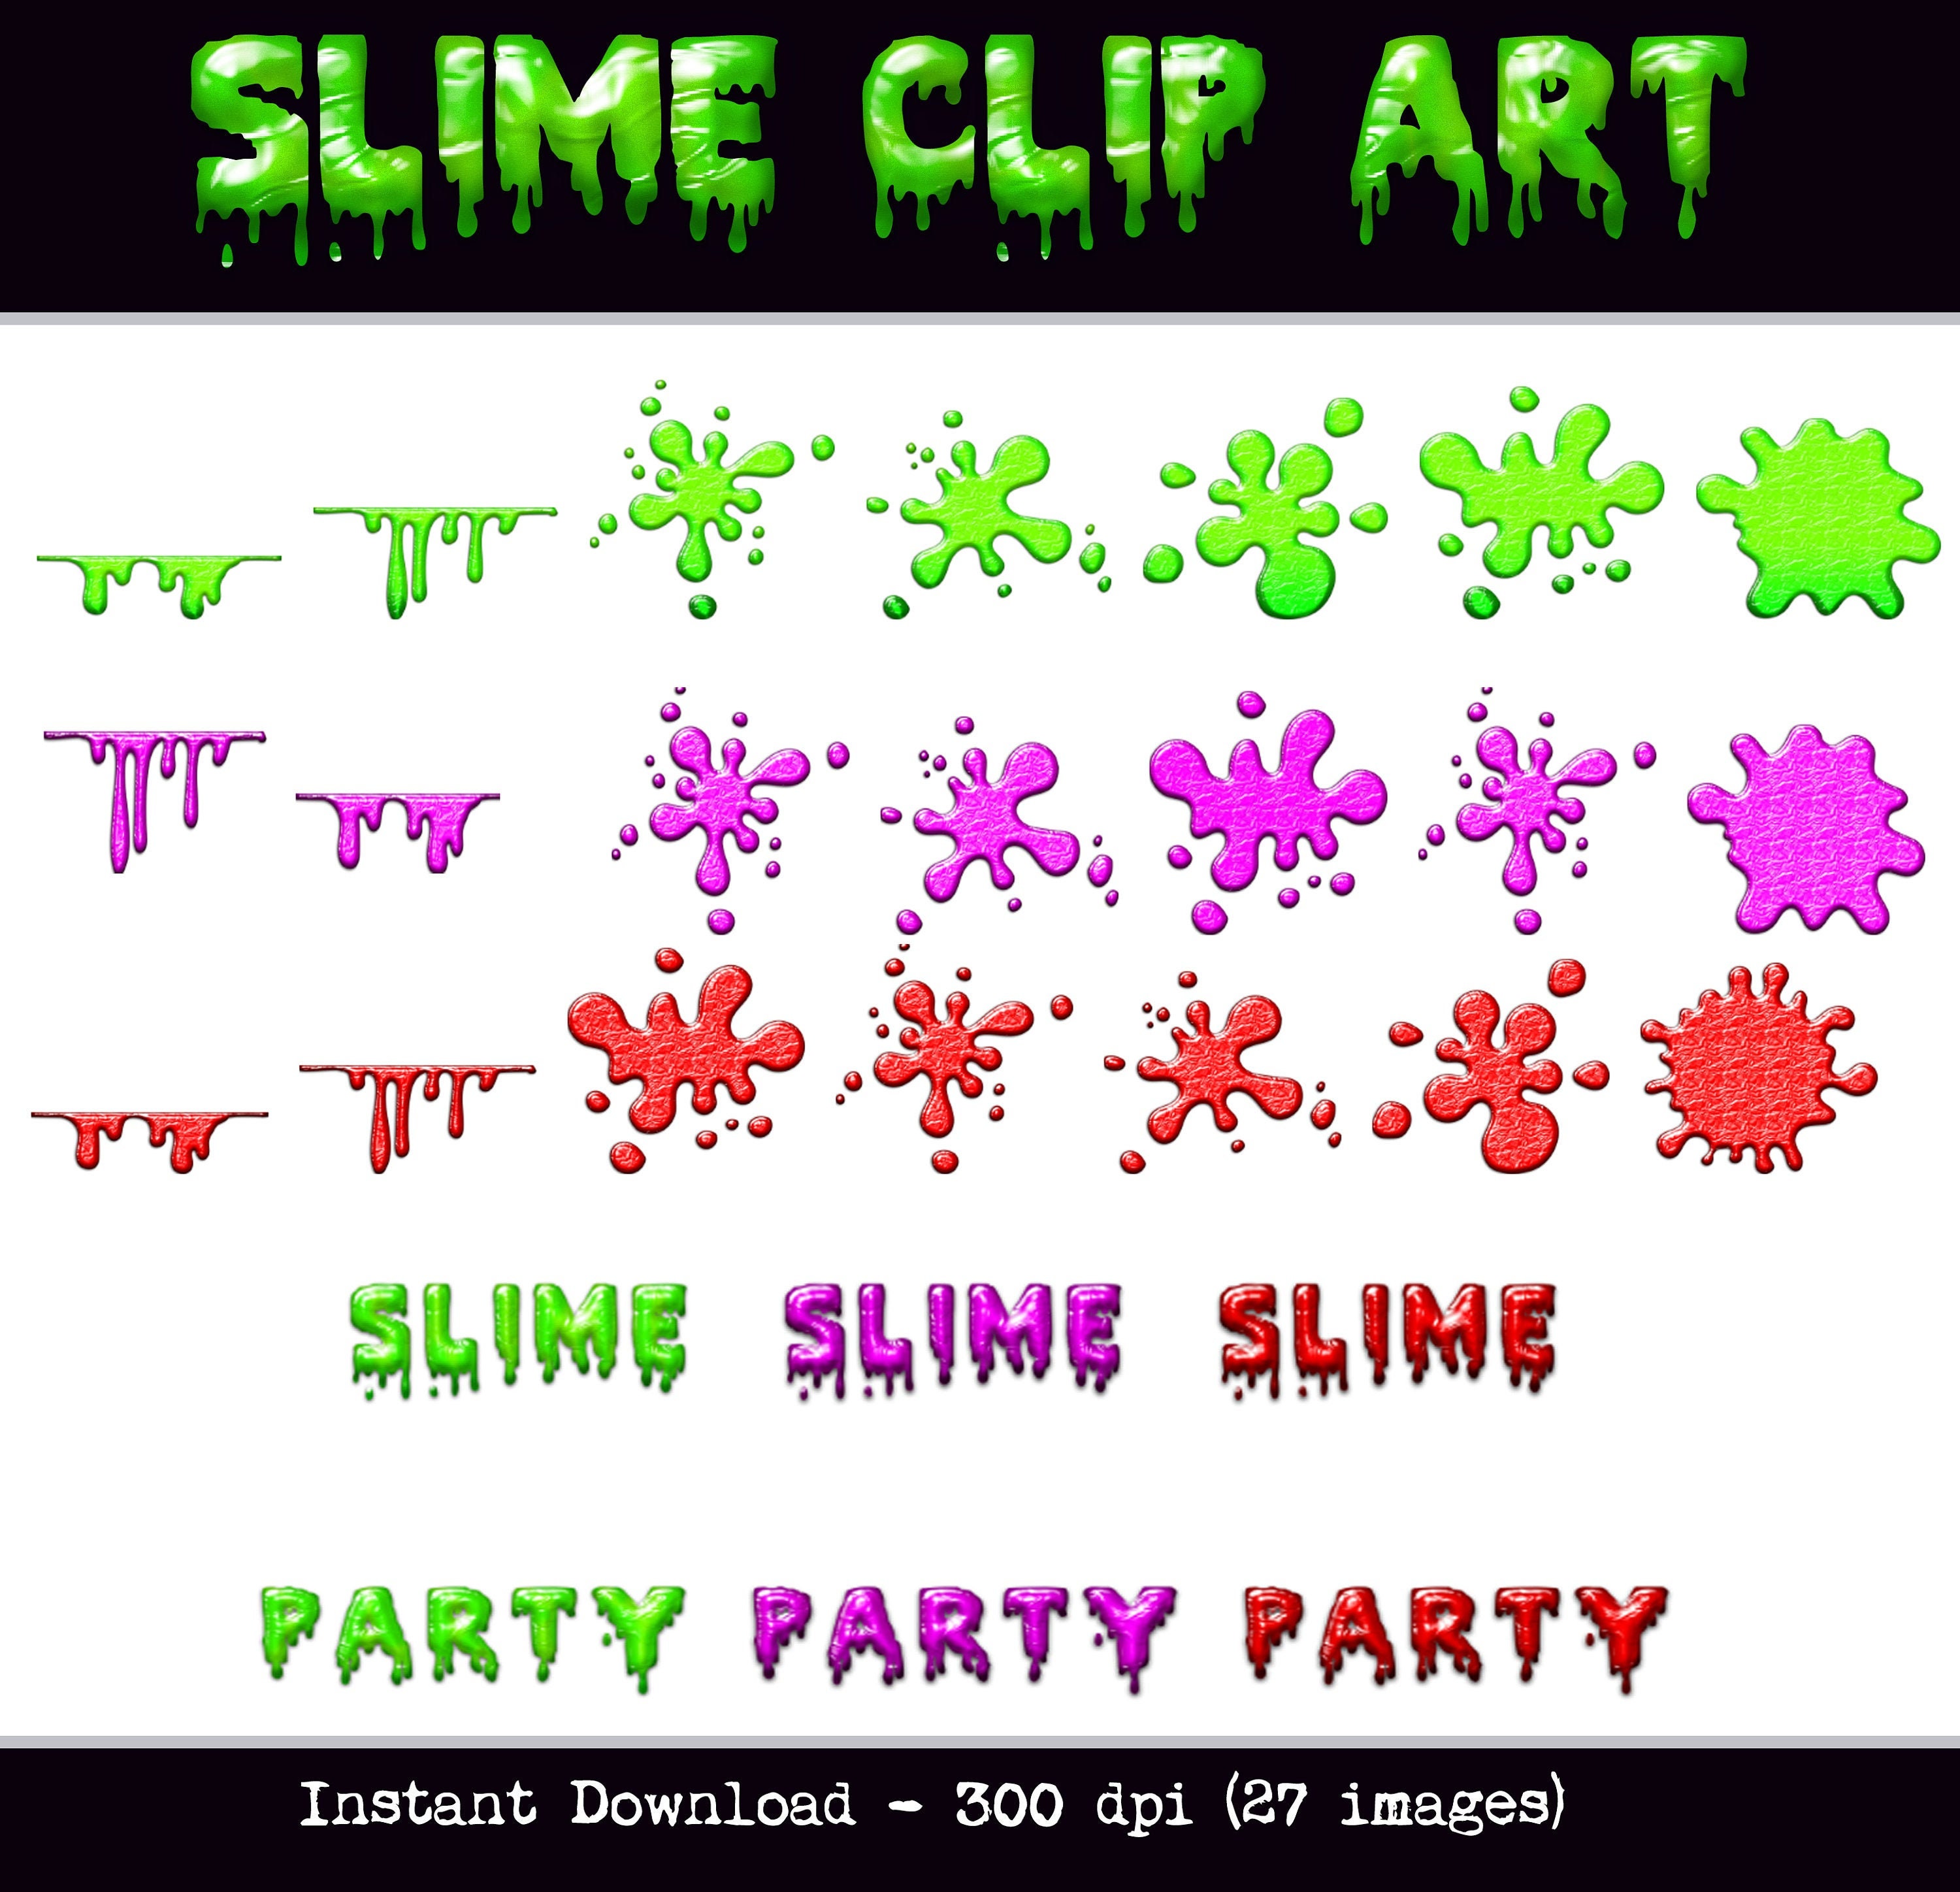 Make Your Own Slime Station Sign, Slime Party, Digital File